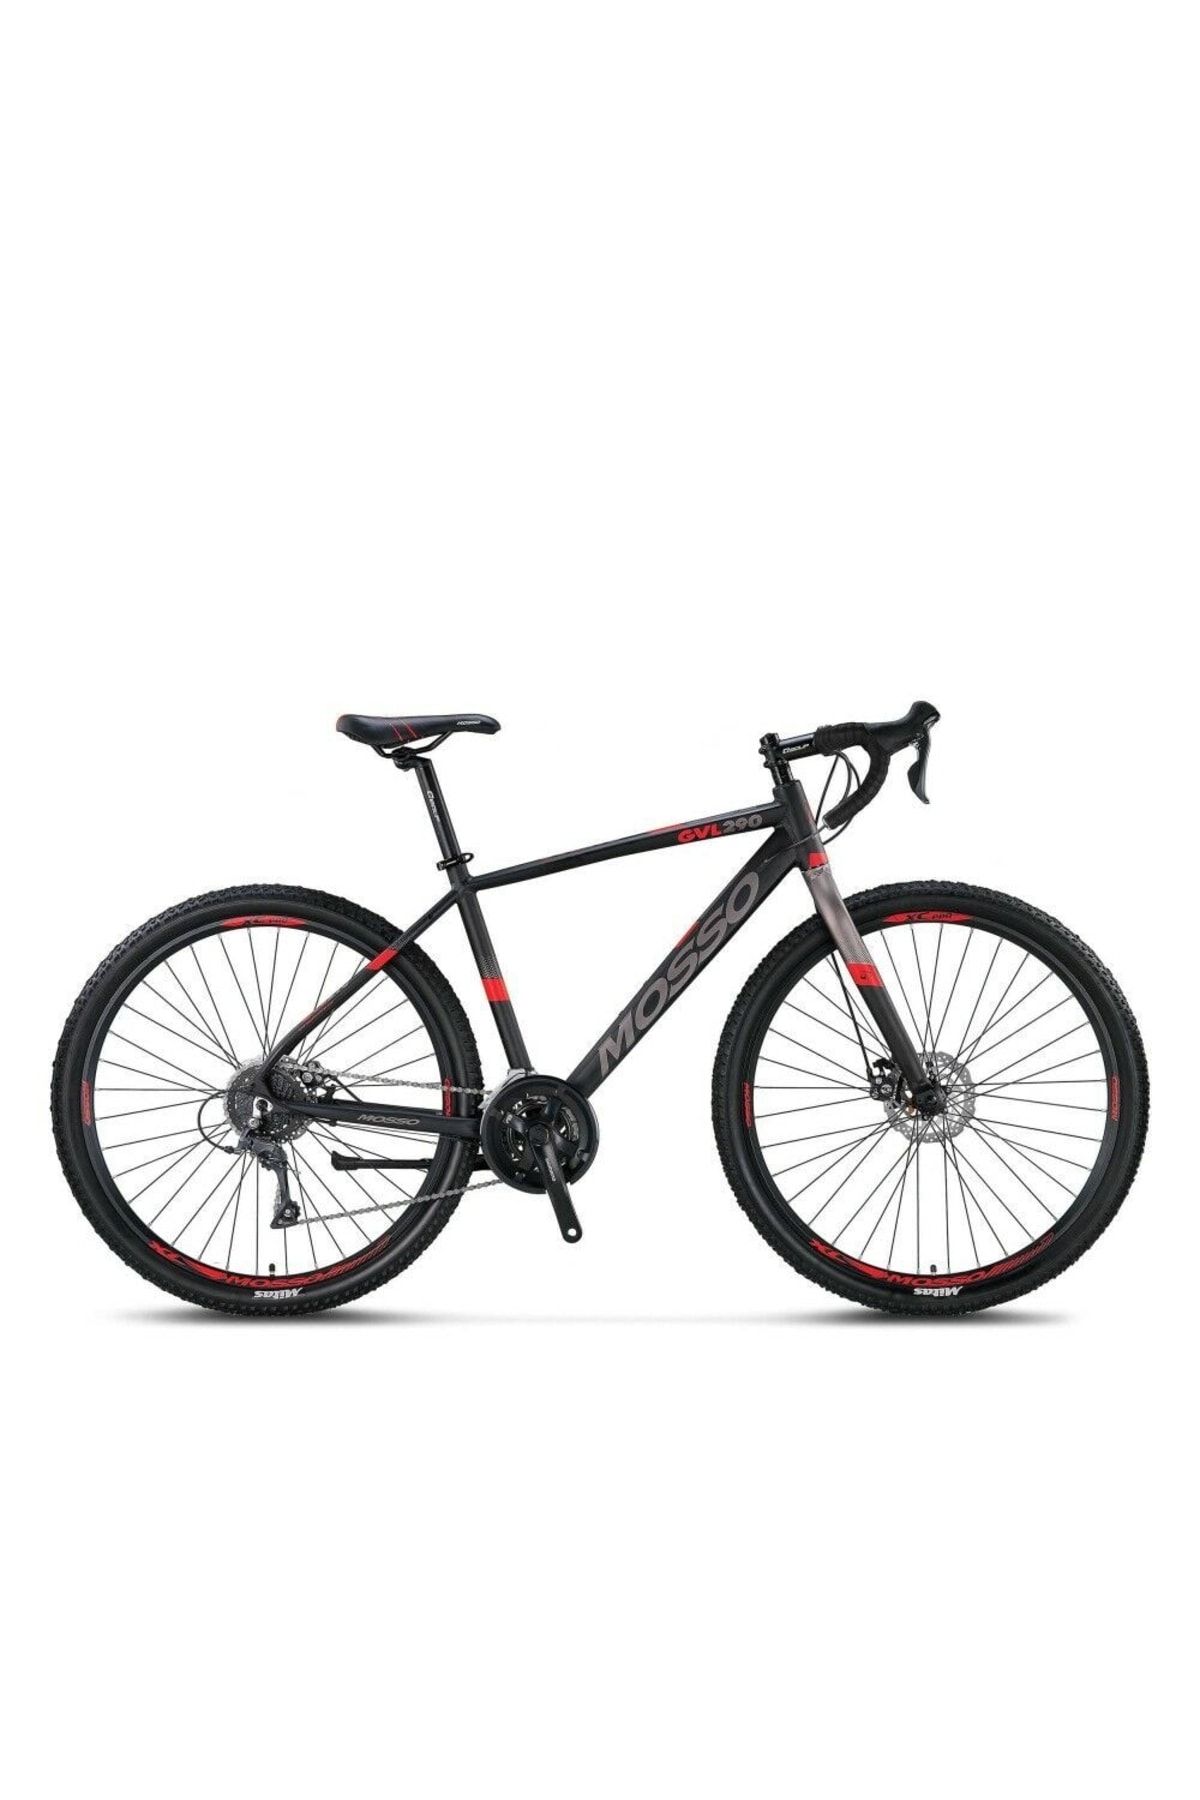 Mosso Gvl290 Gravel Bisiklet Claris 16v - Siyah Kırmızı 19''